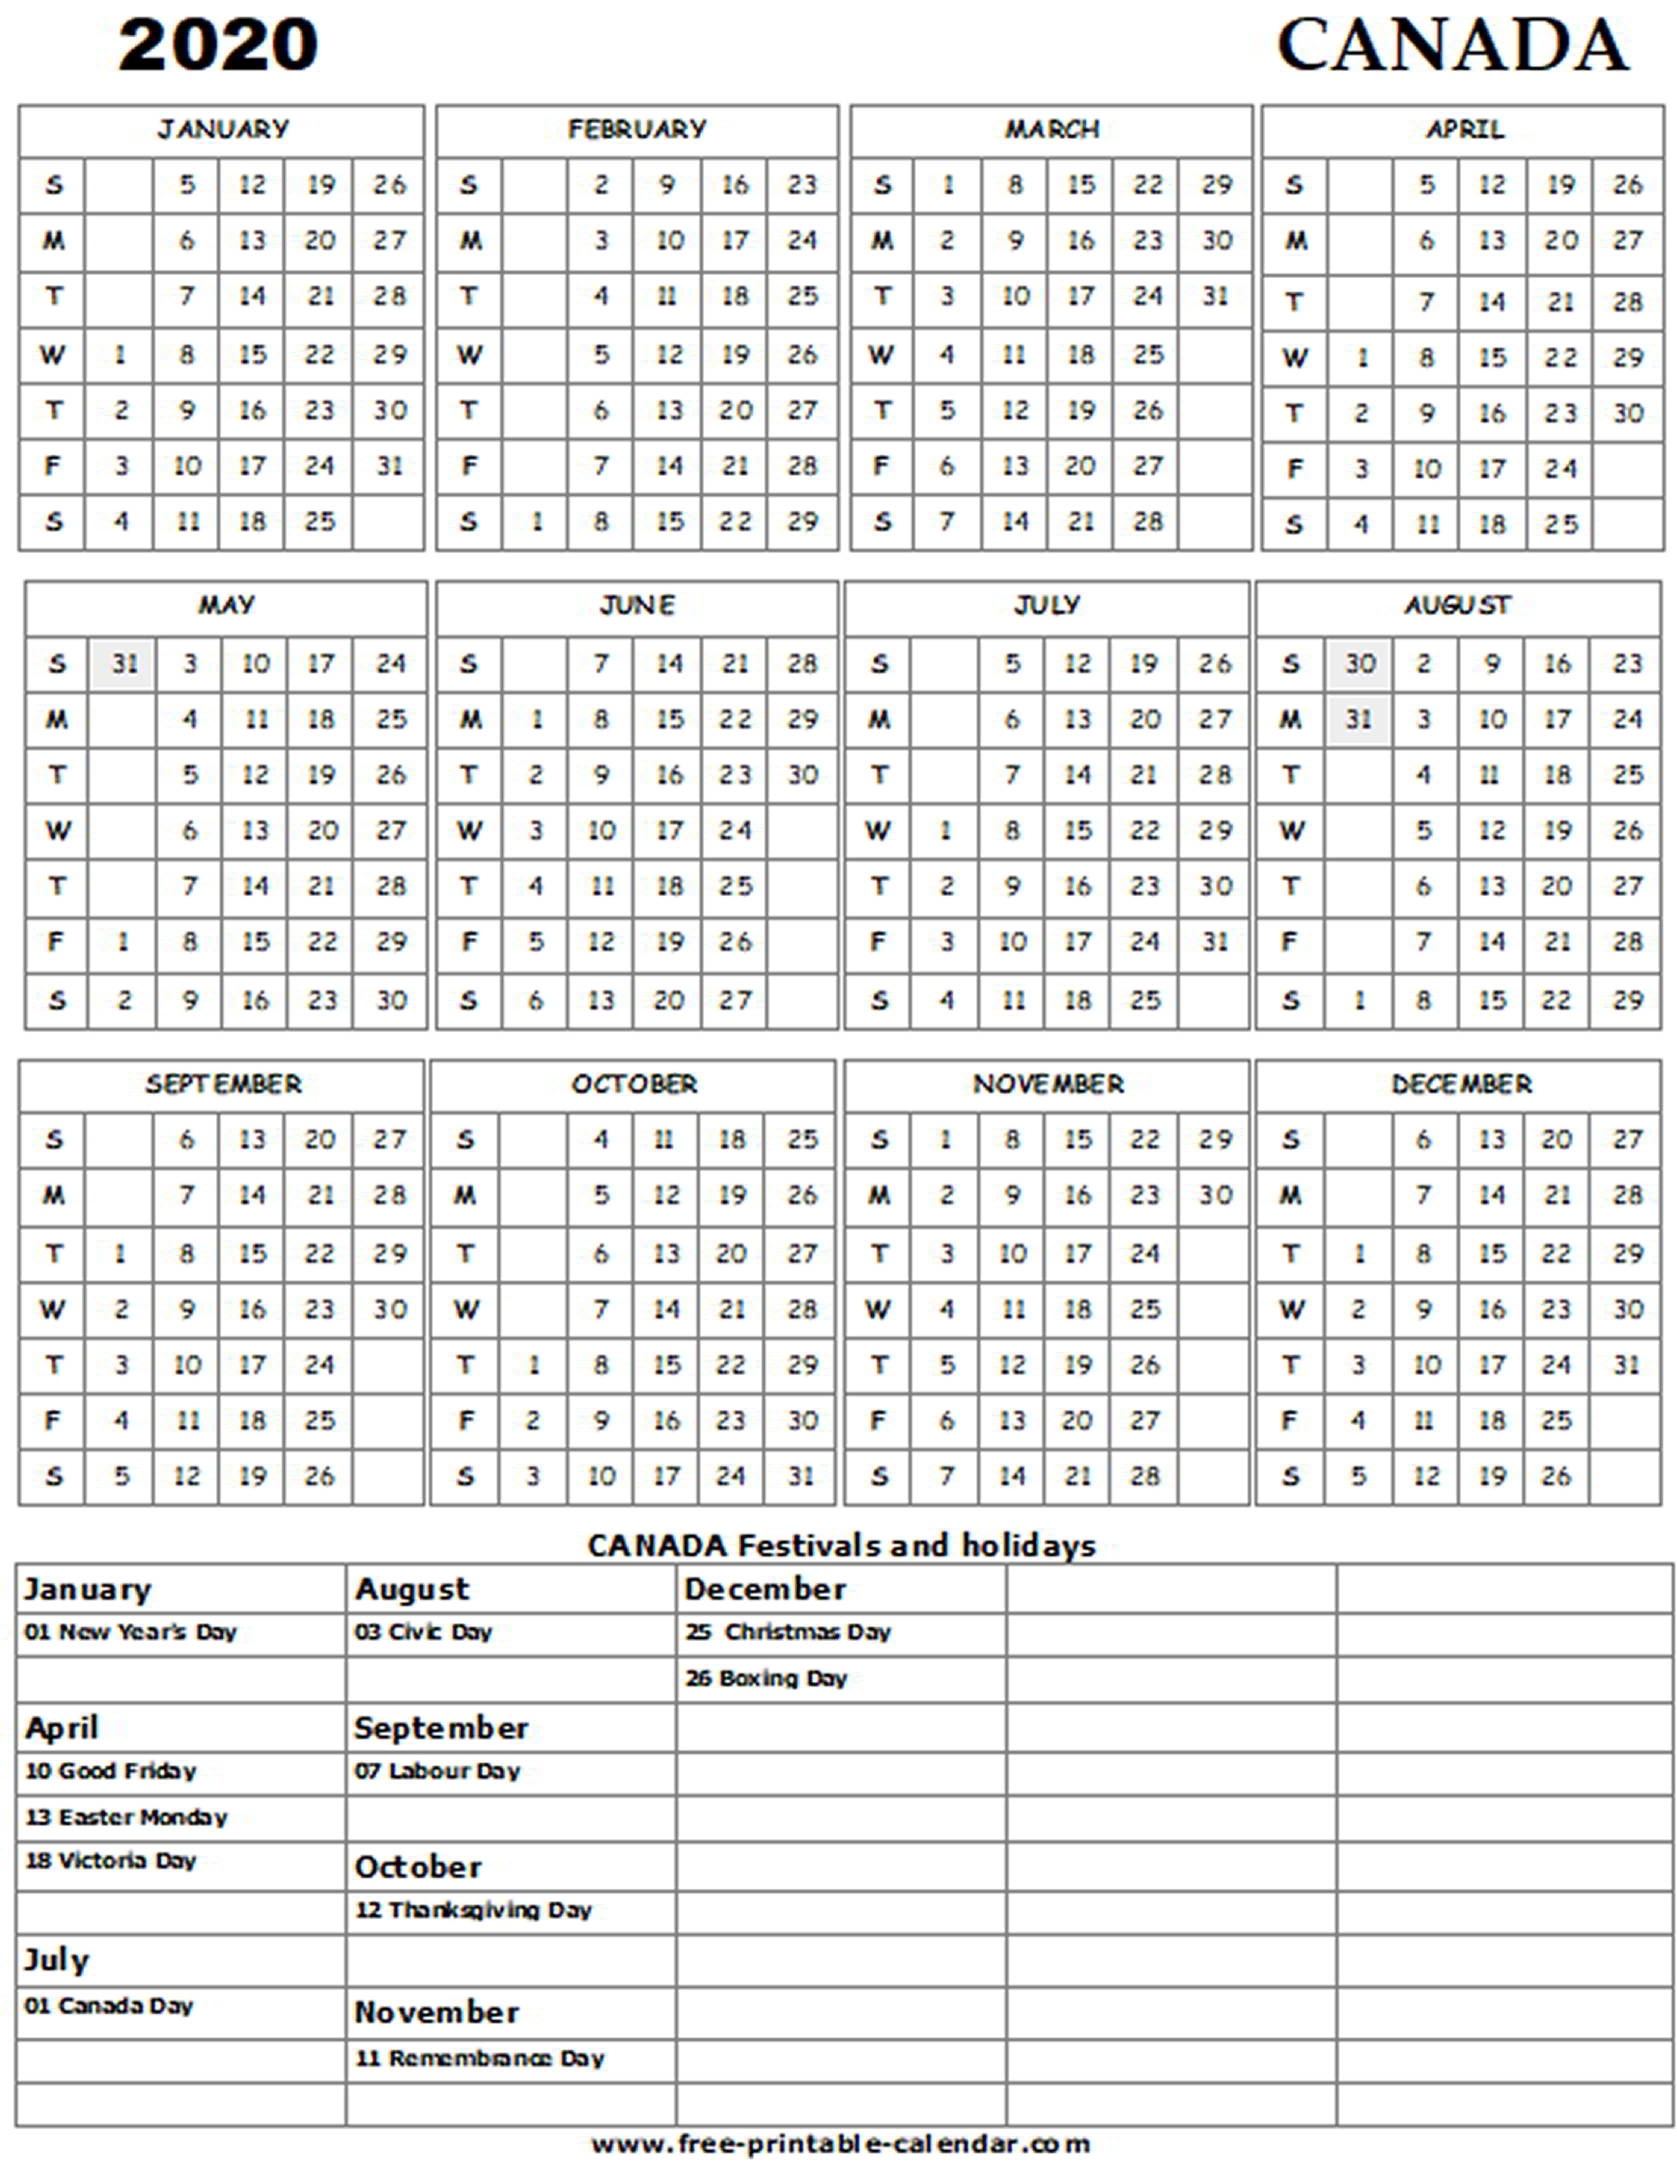 2020 Canada Holiday Calendar - Free-Printable-Calendar 2020 Calendar Canada Printable